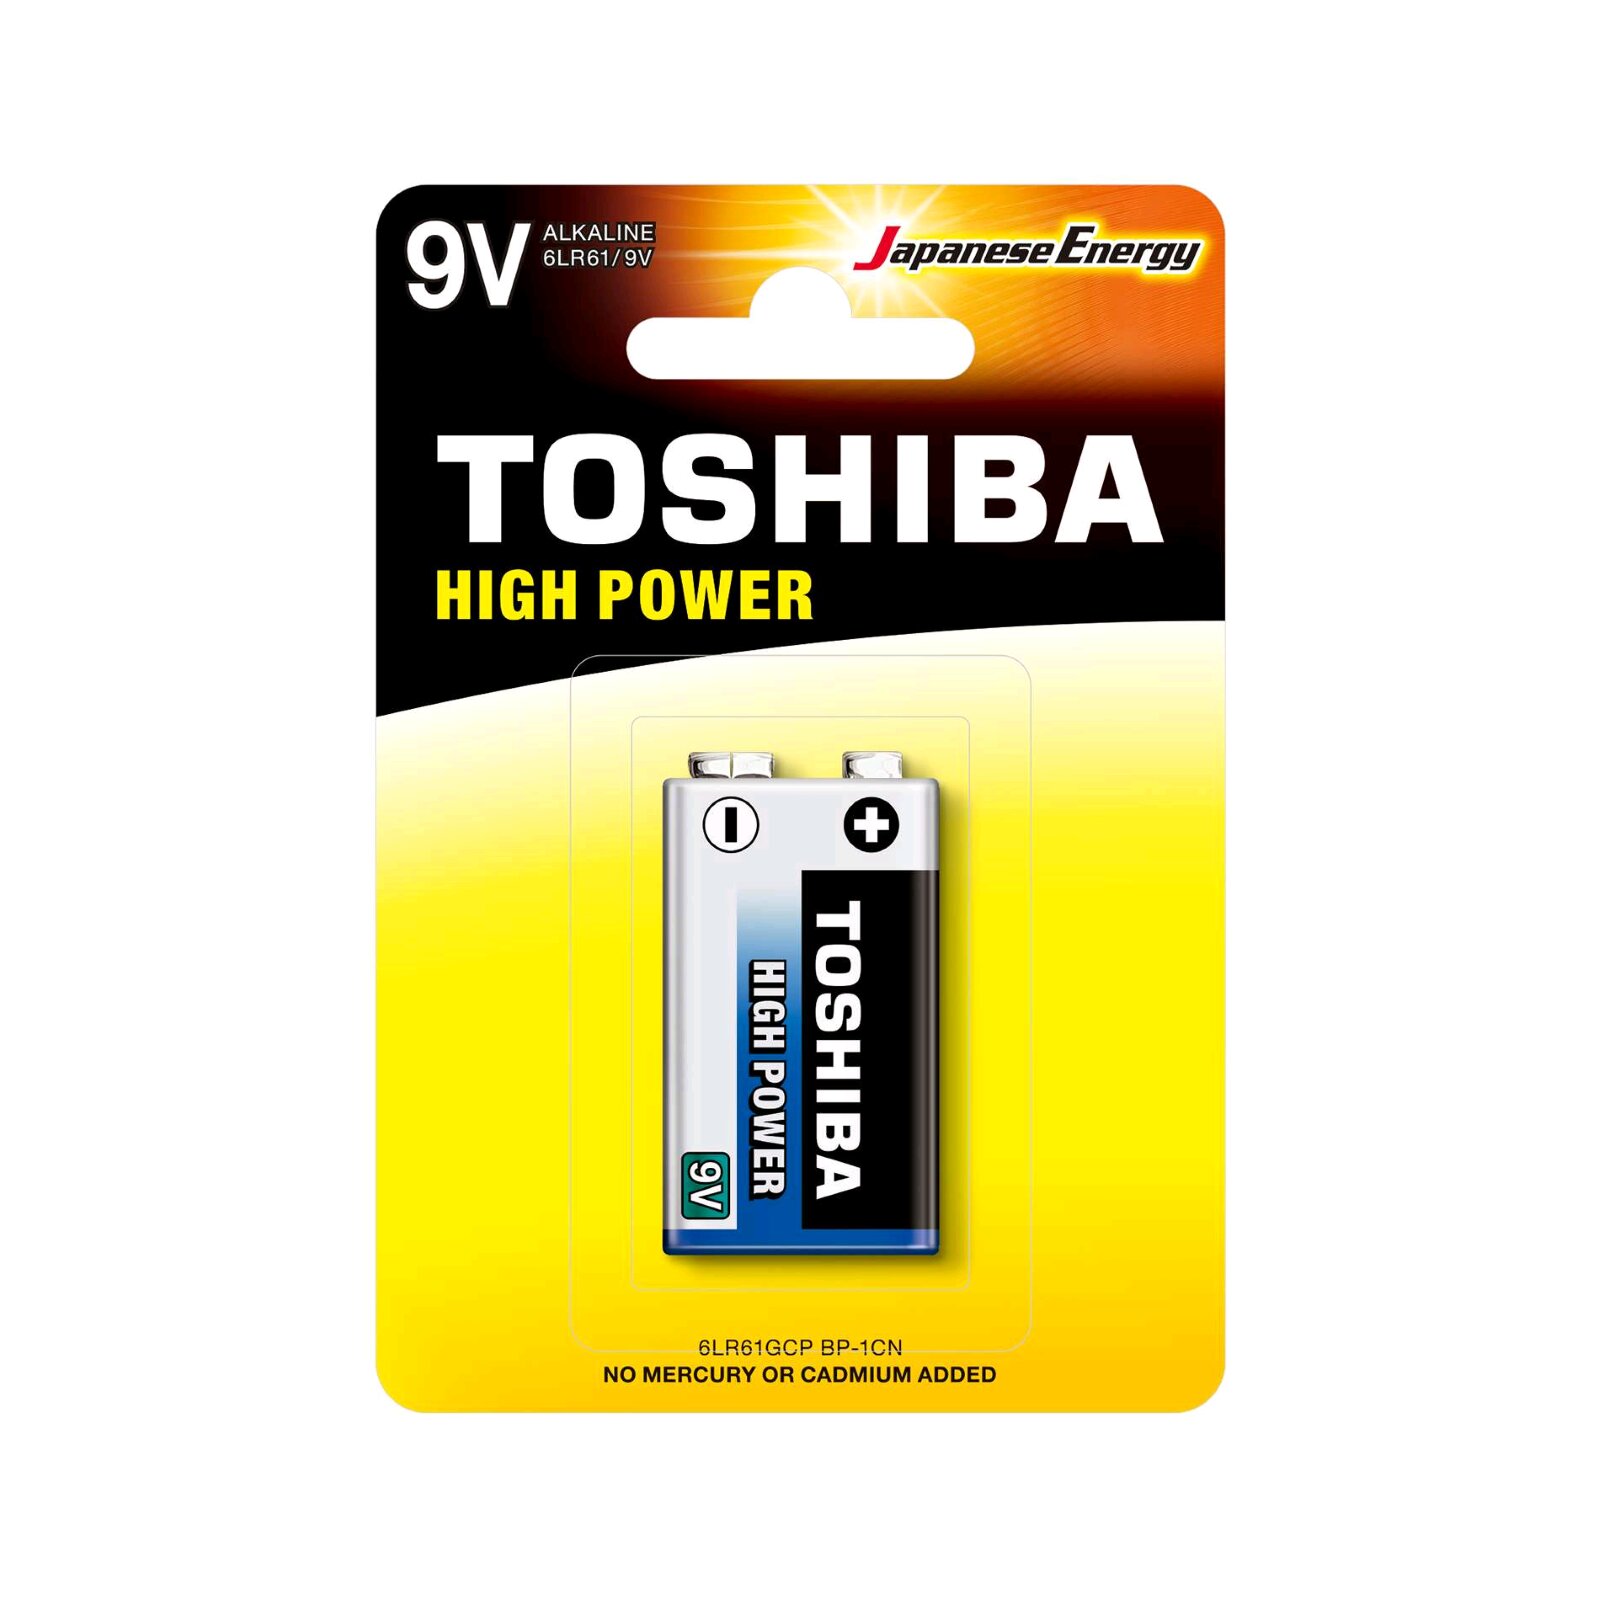 Toshiba High Power 9V - 6LR61GCP BP-1 CN Battery 6LR61 - Pack of 1 : photo 1